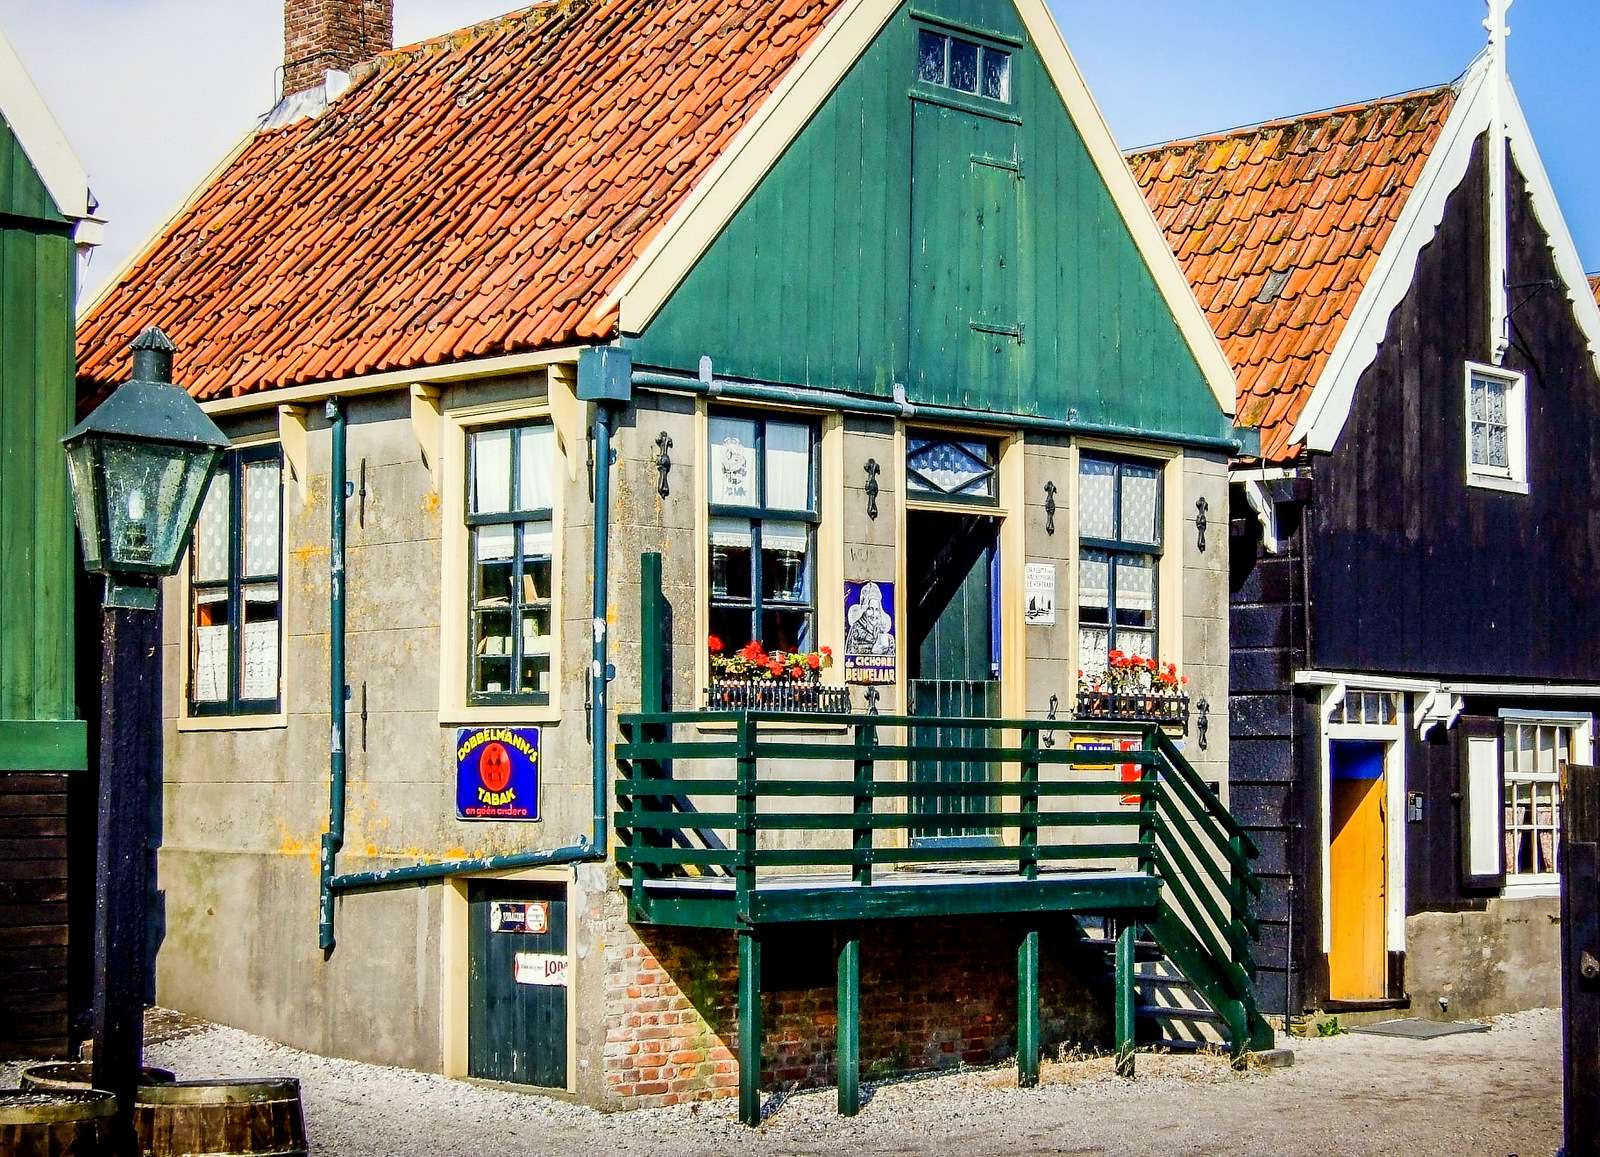 Zuiderzee - Ολλανδικό υπαίθριο μουσείο και μουσείο παζλ online